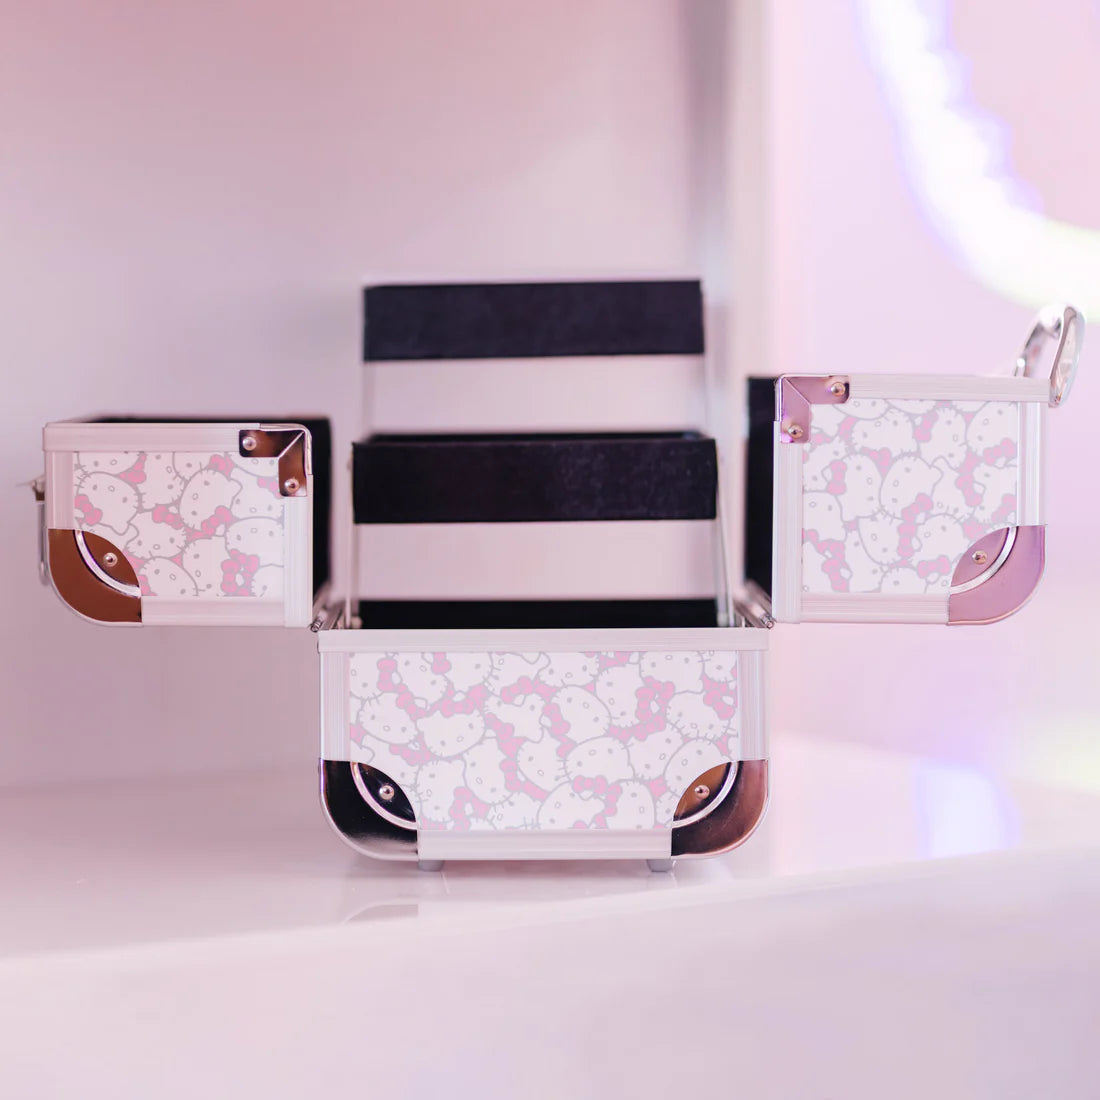 Impressions Vanity - Hello Kitty SlayCube Makeup Travel Case White